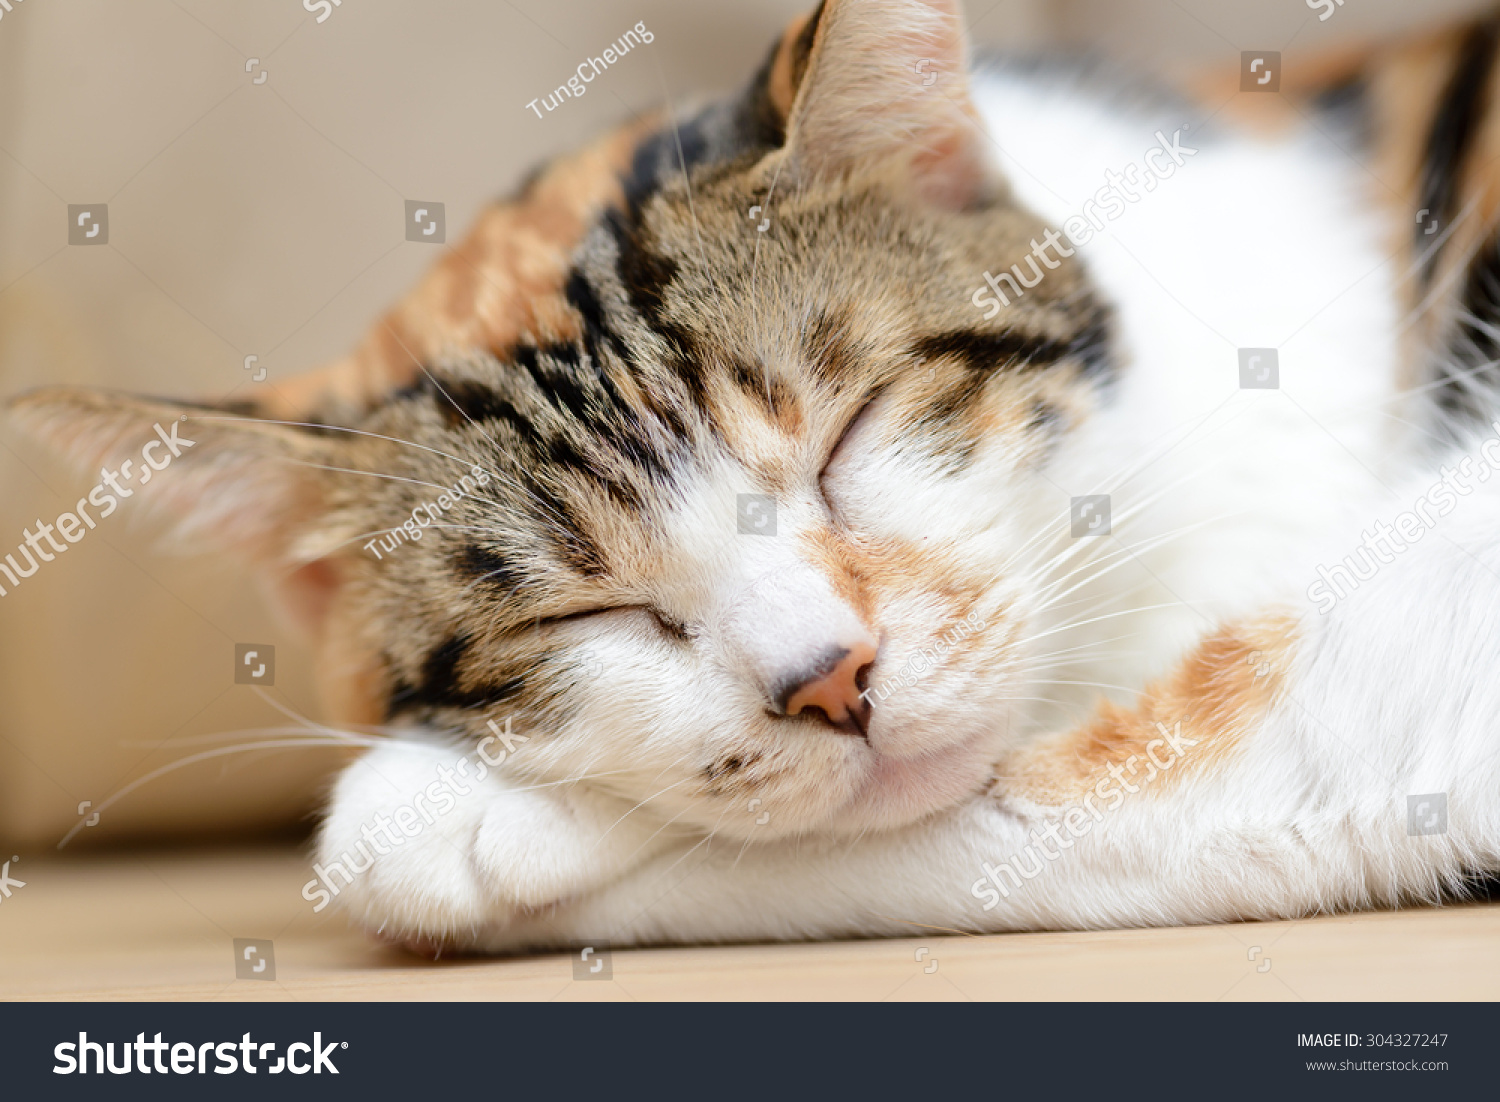 Sleepy Cat Stock Photo 304327247 : Shutterstock